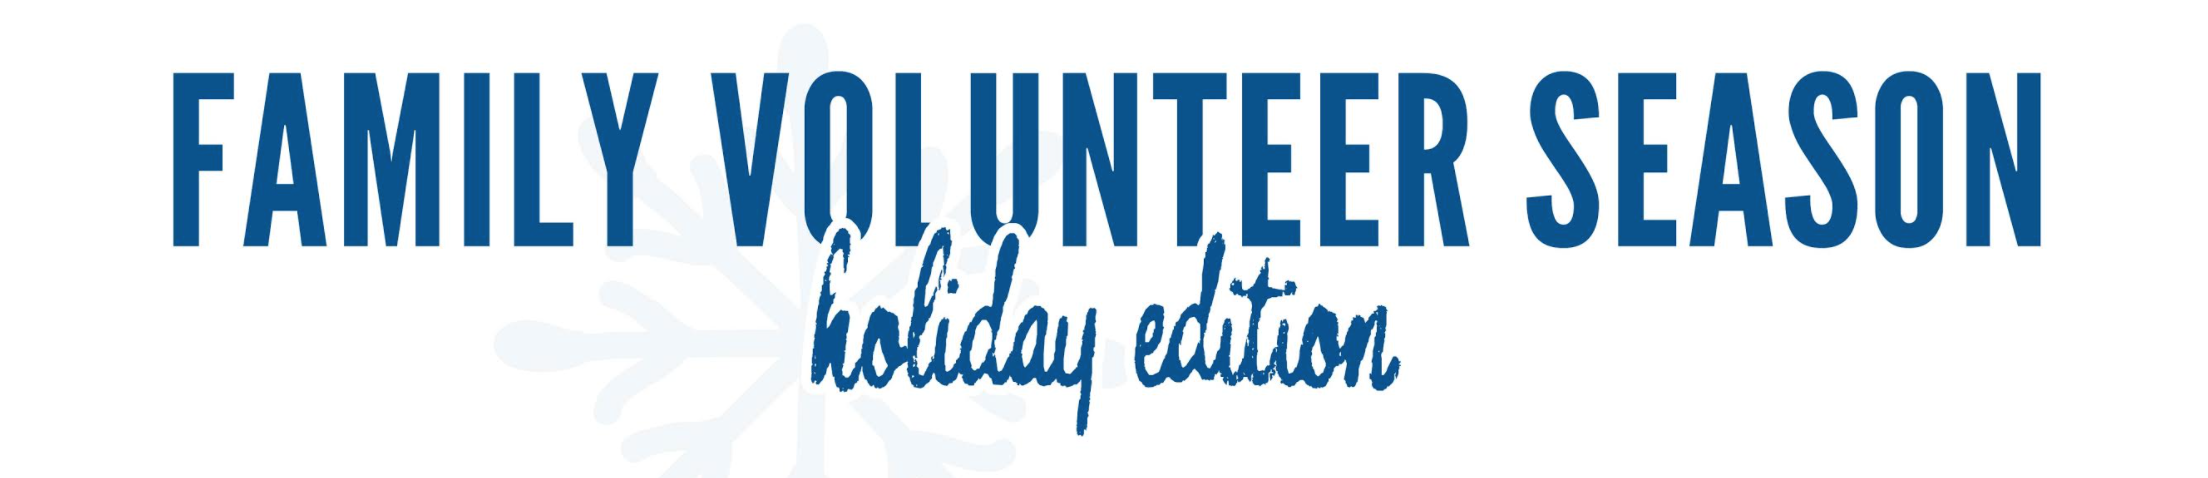 Family Volunteer Season: Holiday Edition